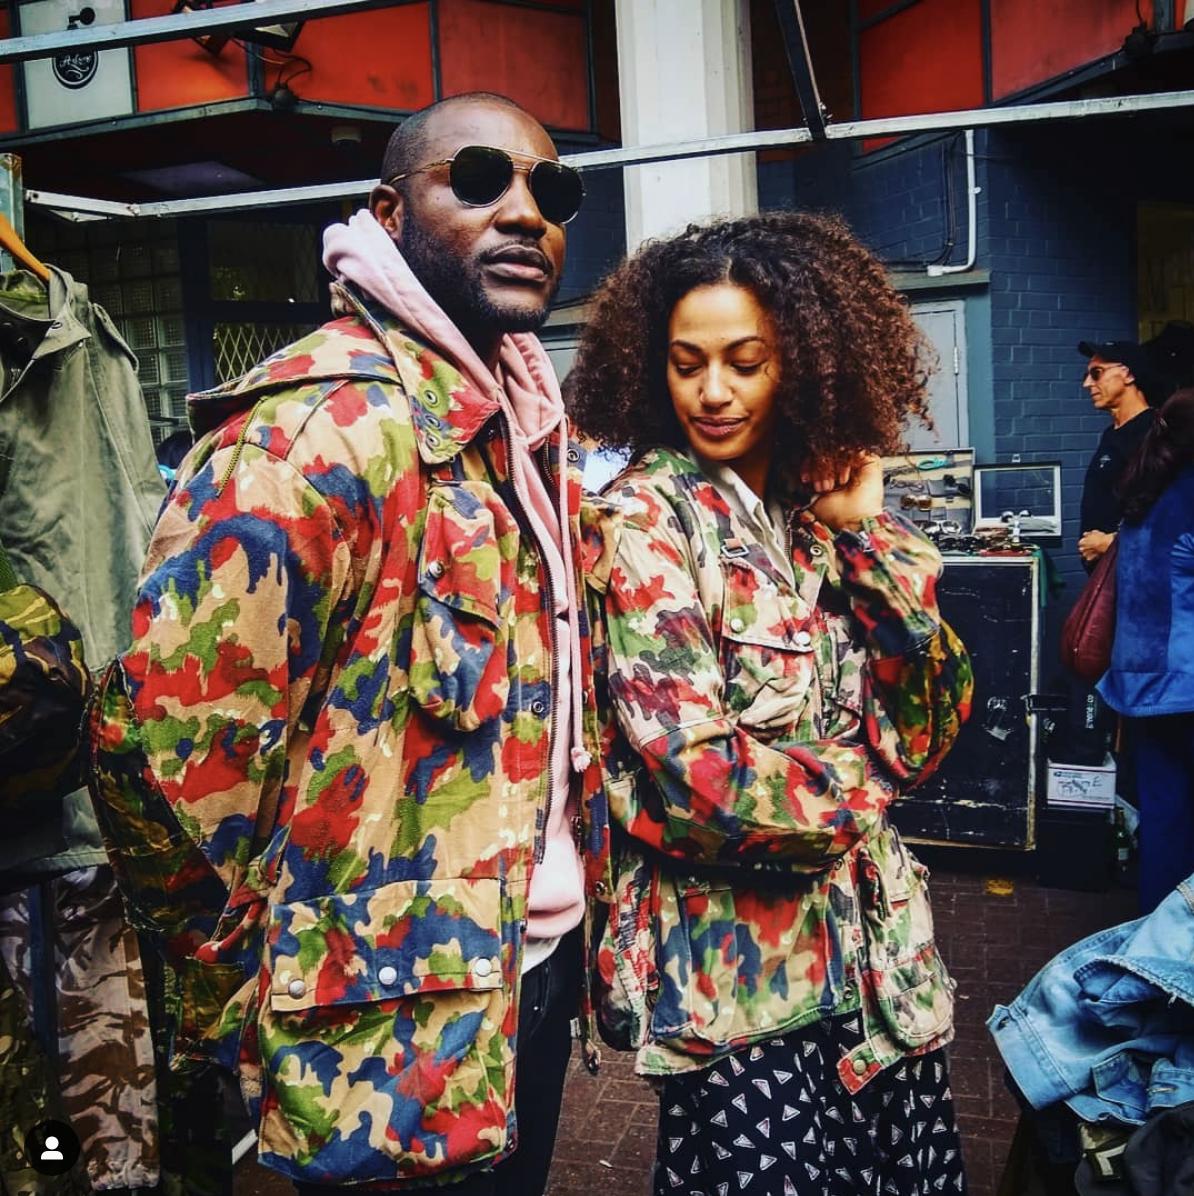 Vintage Swiss Army Alpenflage combat jackets
#portobellogreenmarket #portobelloroadmarket  militaryclothing #urbanstyle #urbanfashion #vintagemilitaryclothing #vintagestyle #vintage #vintageclothing #vintagefashio #vintagecamo #camojacket #camoflauge #camo